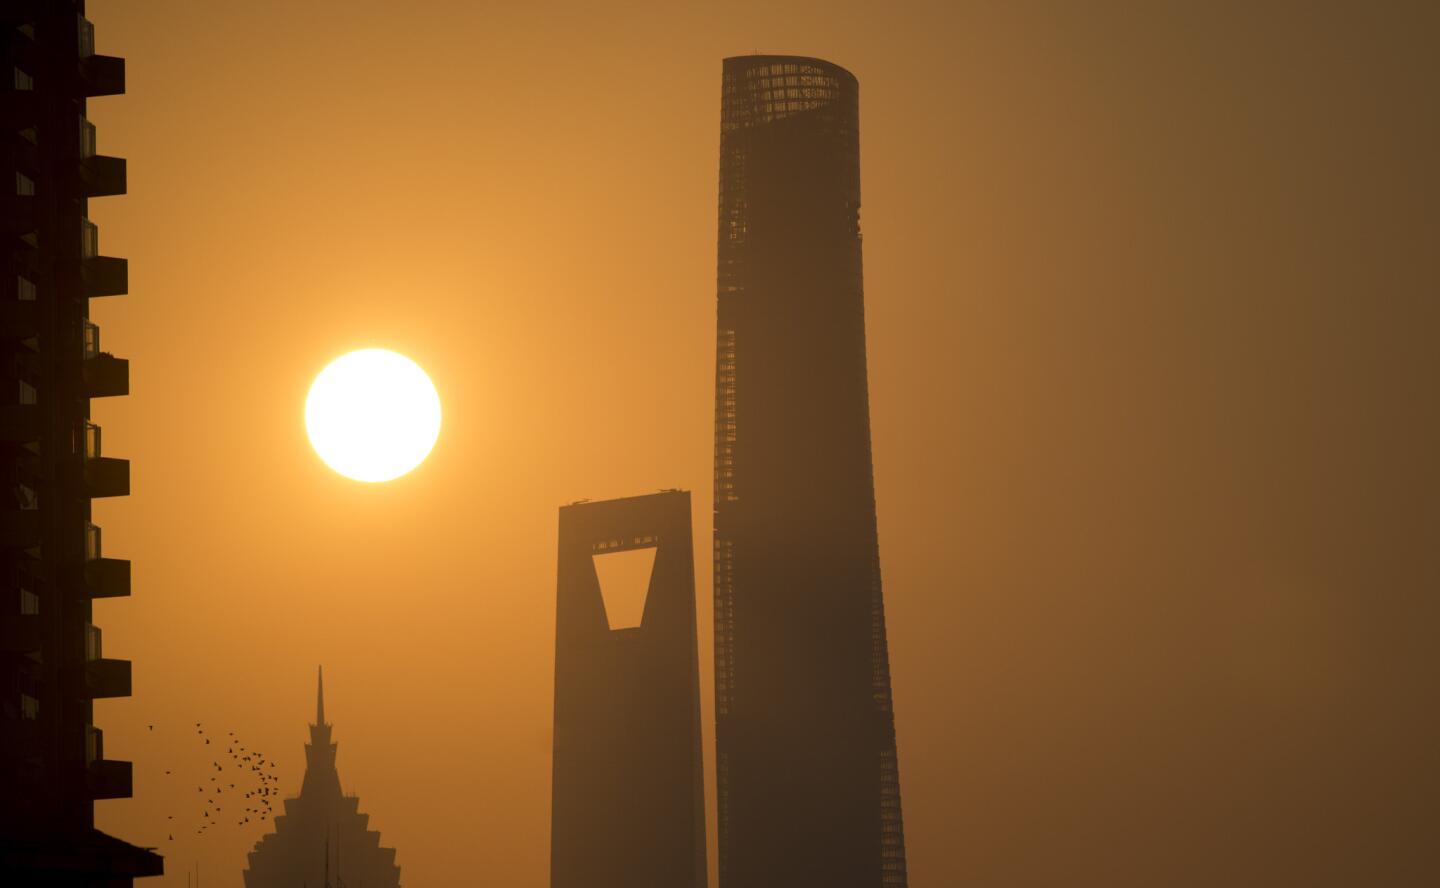 2. Shanghai Tower